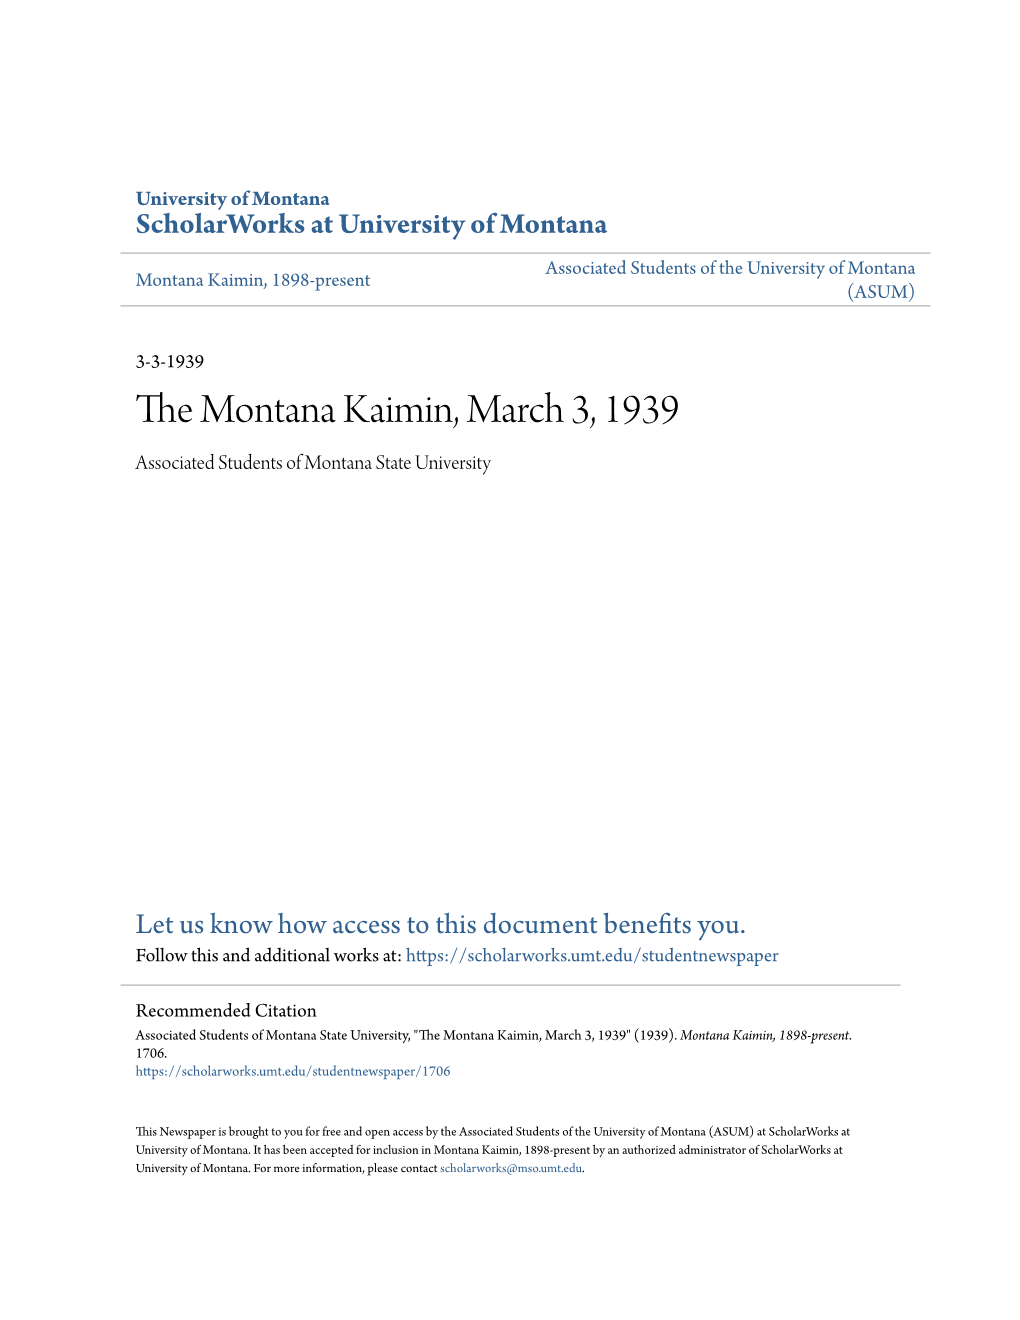 The Montana Kaimin, March 3, 1939